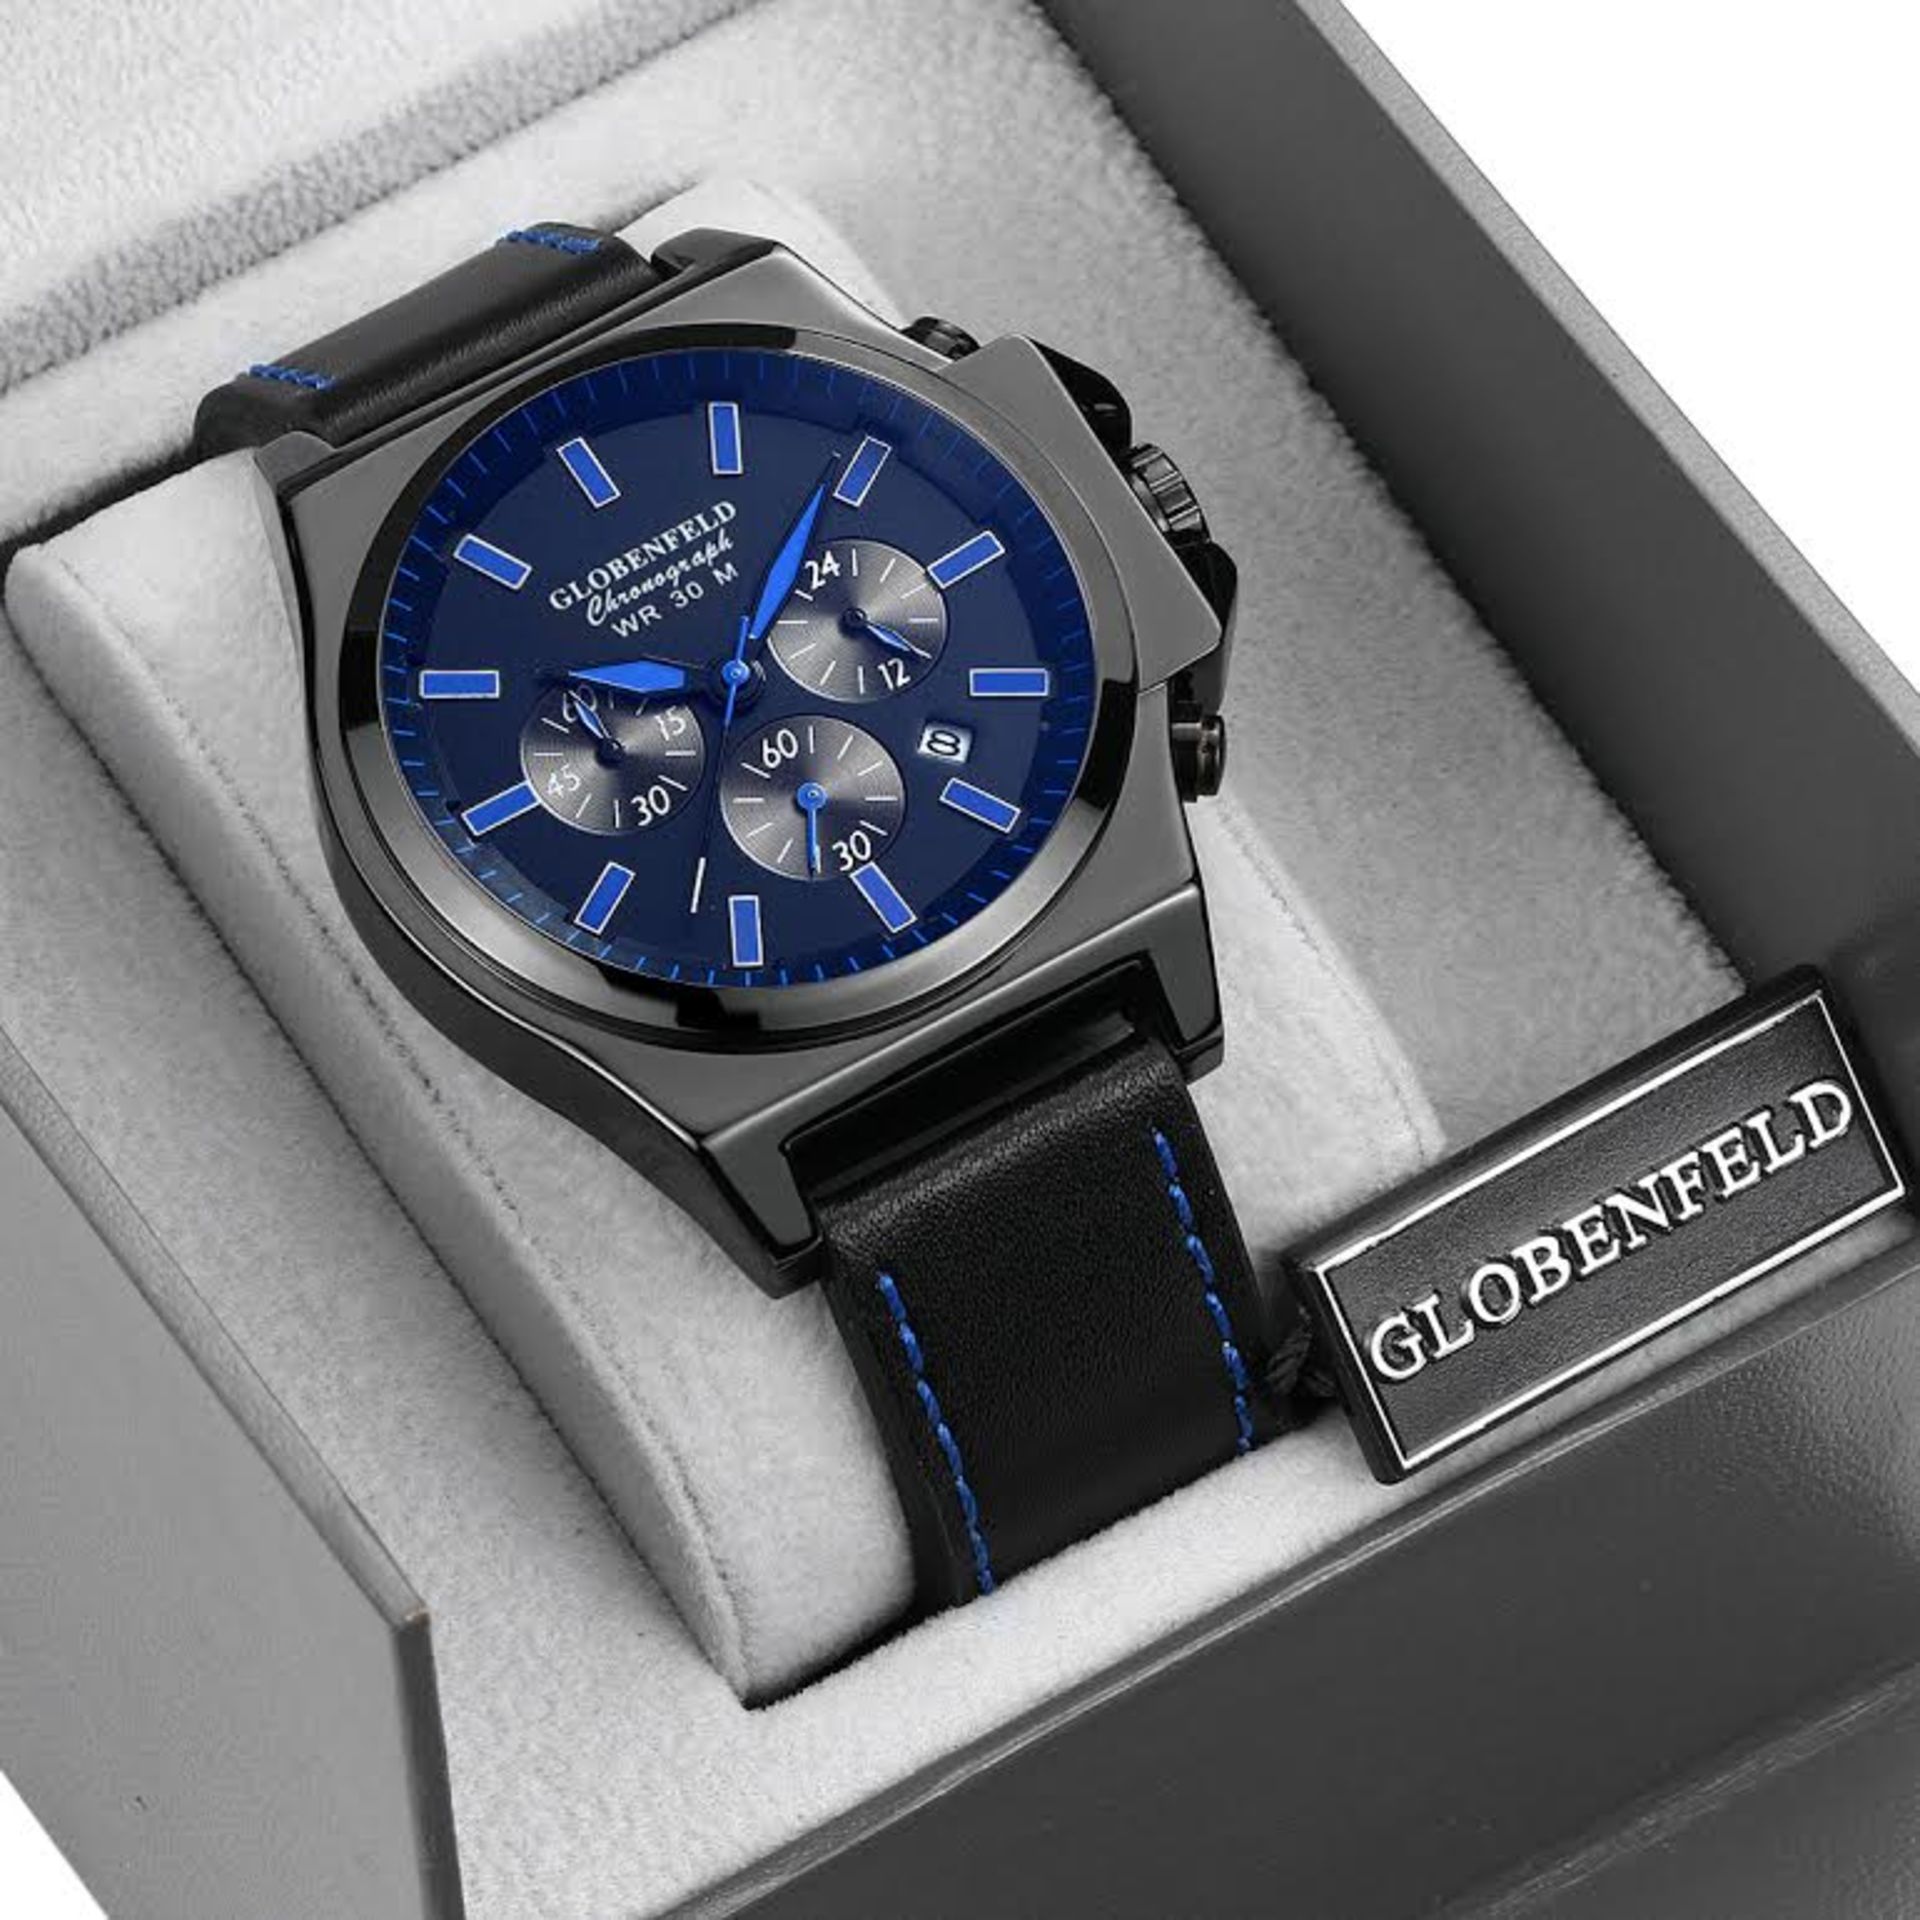 V Brand New Gents Globenfeld Chronograph - Black/Blue Face - Jet Black High Grade Leather Strap with